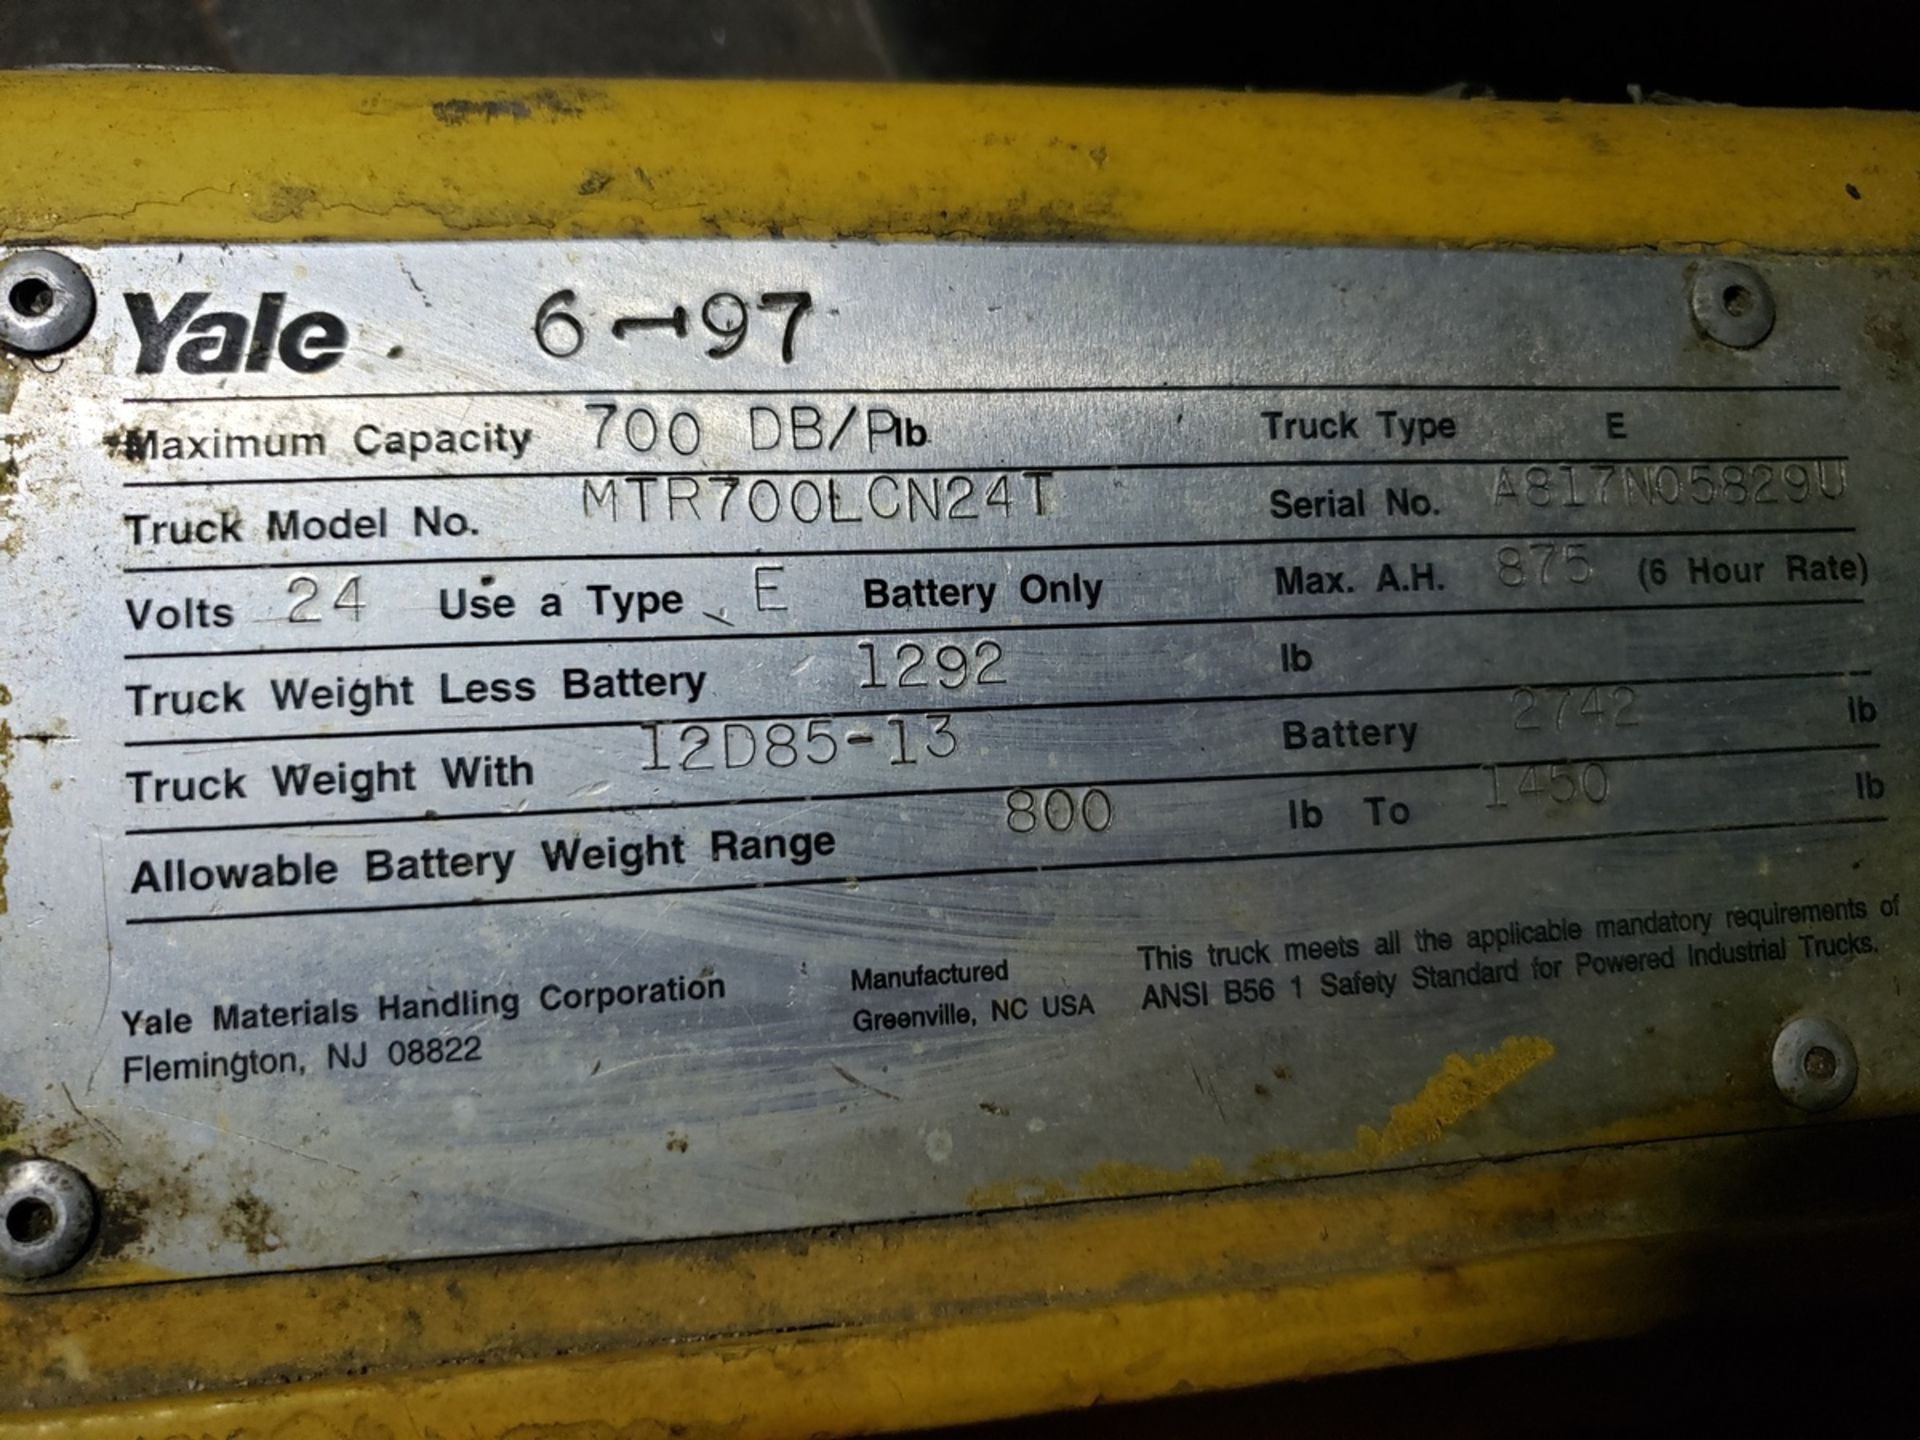 Yale Electric Tug, 700 DB/P lbs., 24 Volt, M# MTR700LCN24T, S/N A817N05829U | Rig Fee: $75 - Image 2 of 2